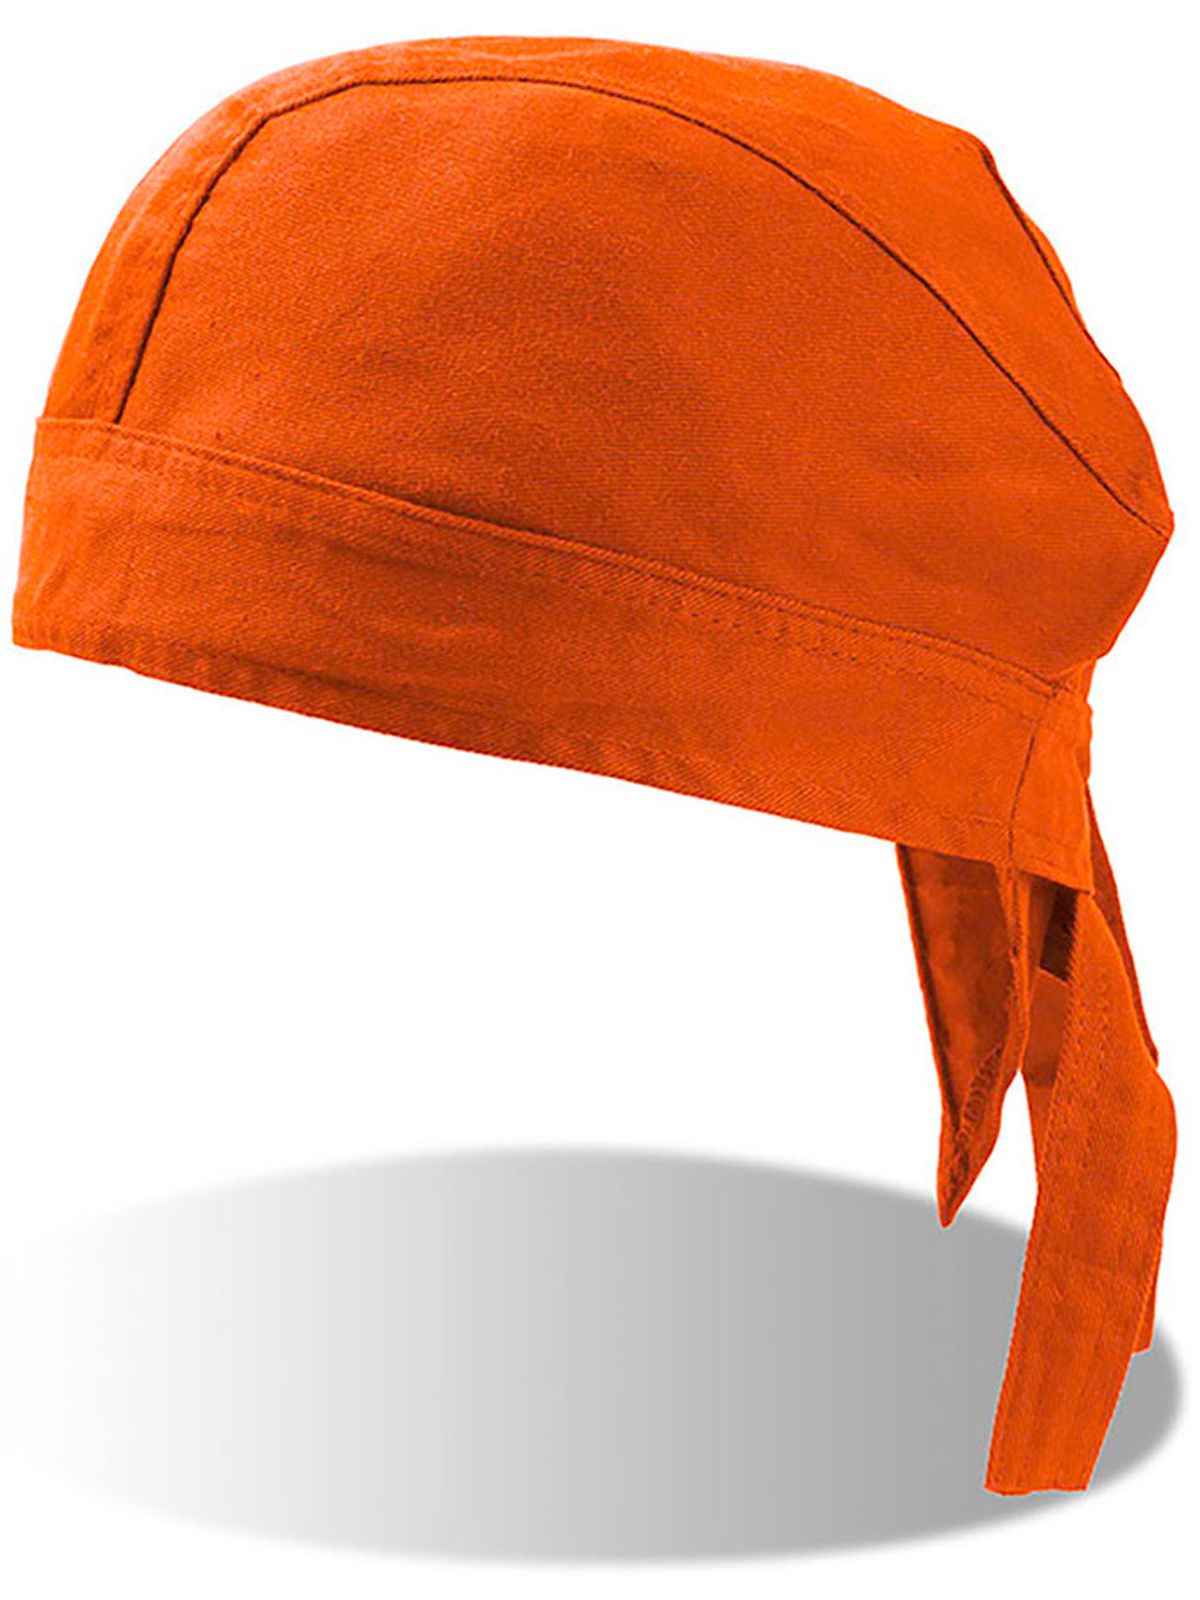 bandana-long-orange.webp